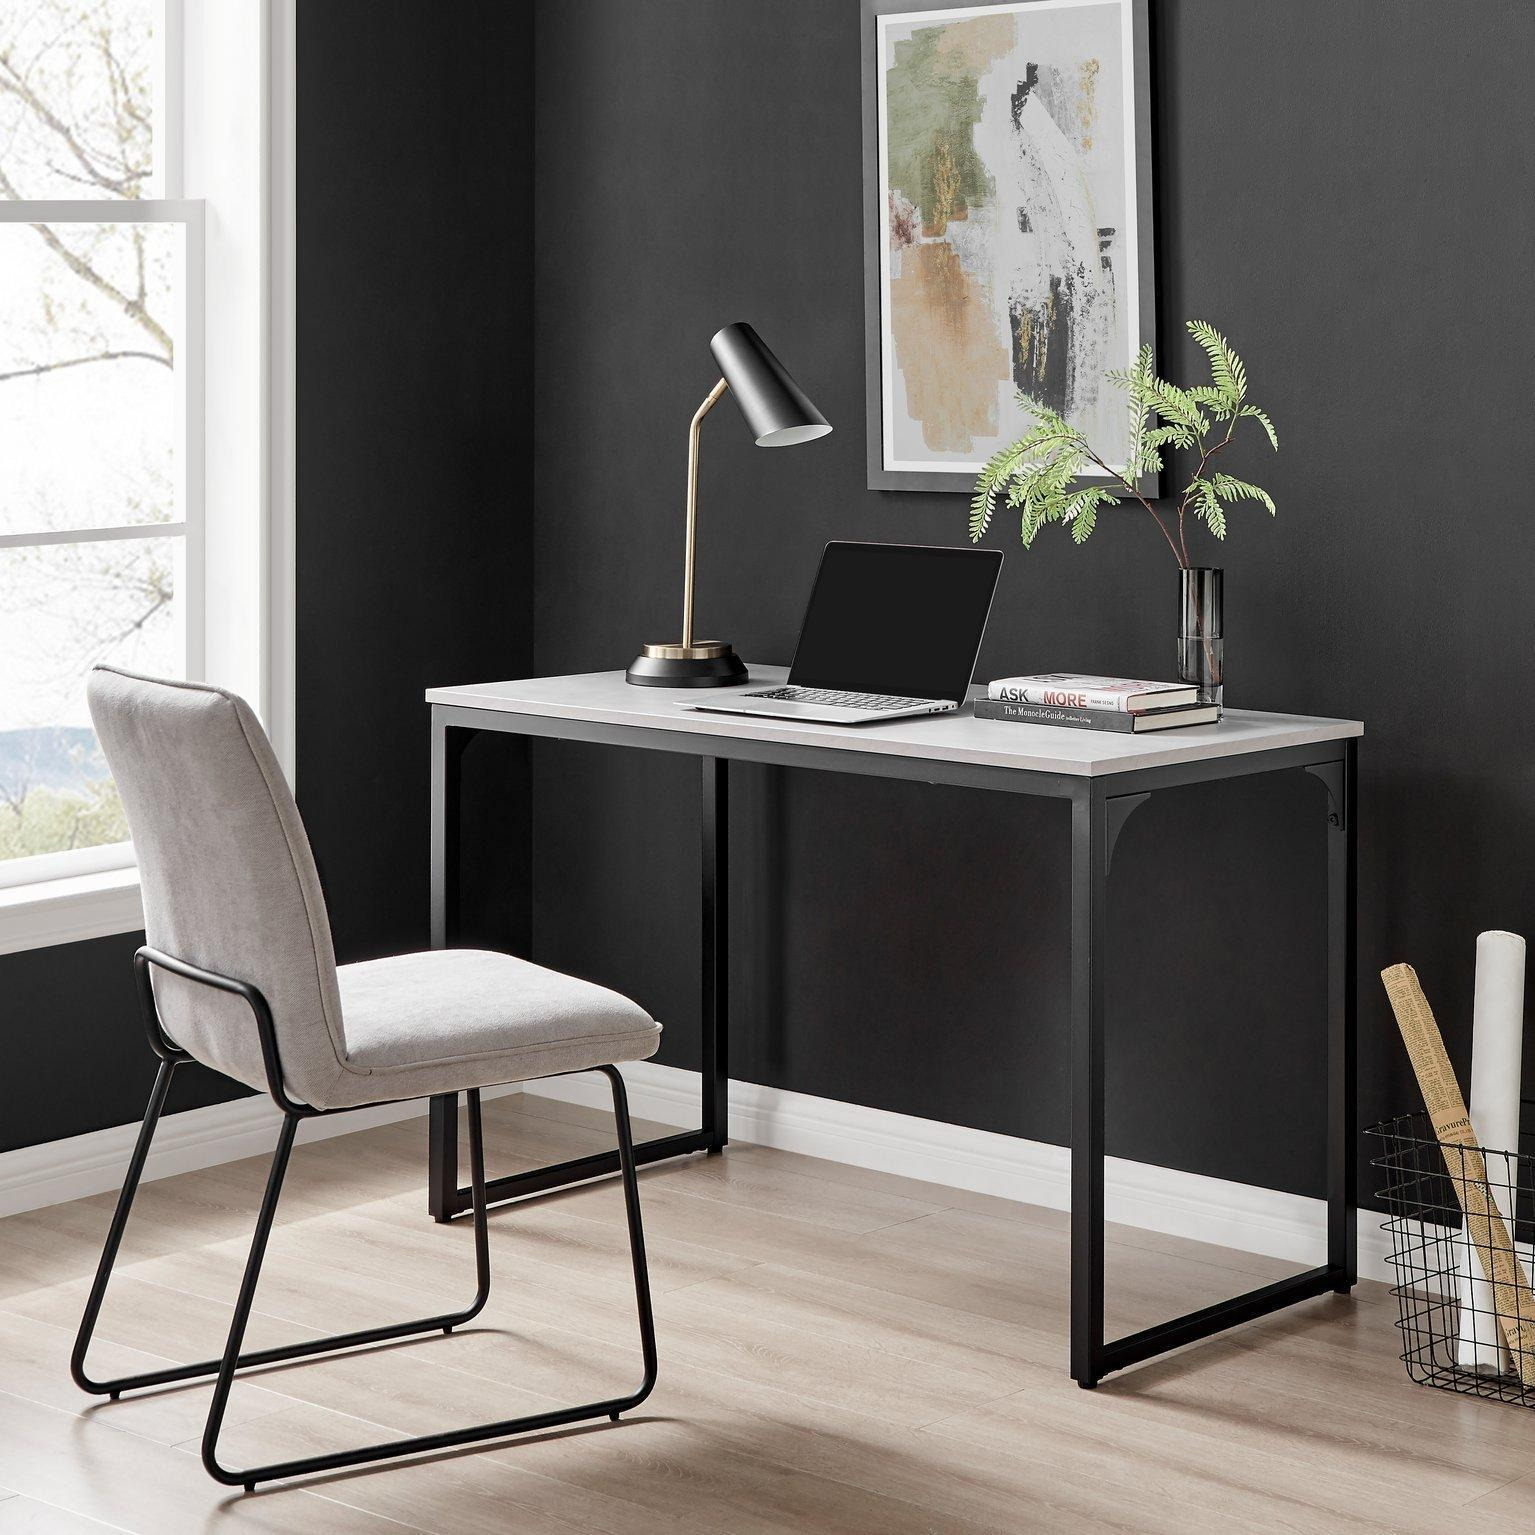 Kendrick 120cm Melamine Coated Home Office Computer Desk with Black Legs - image 1